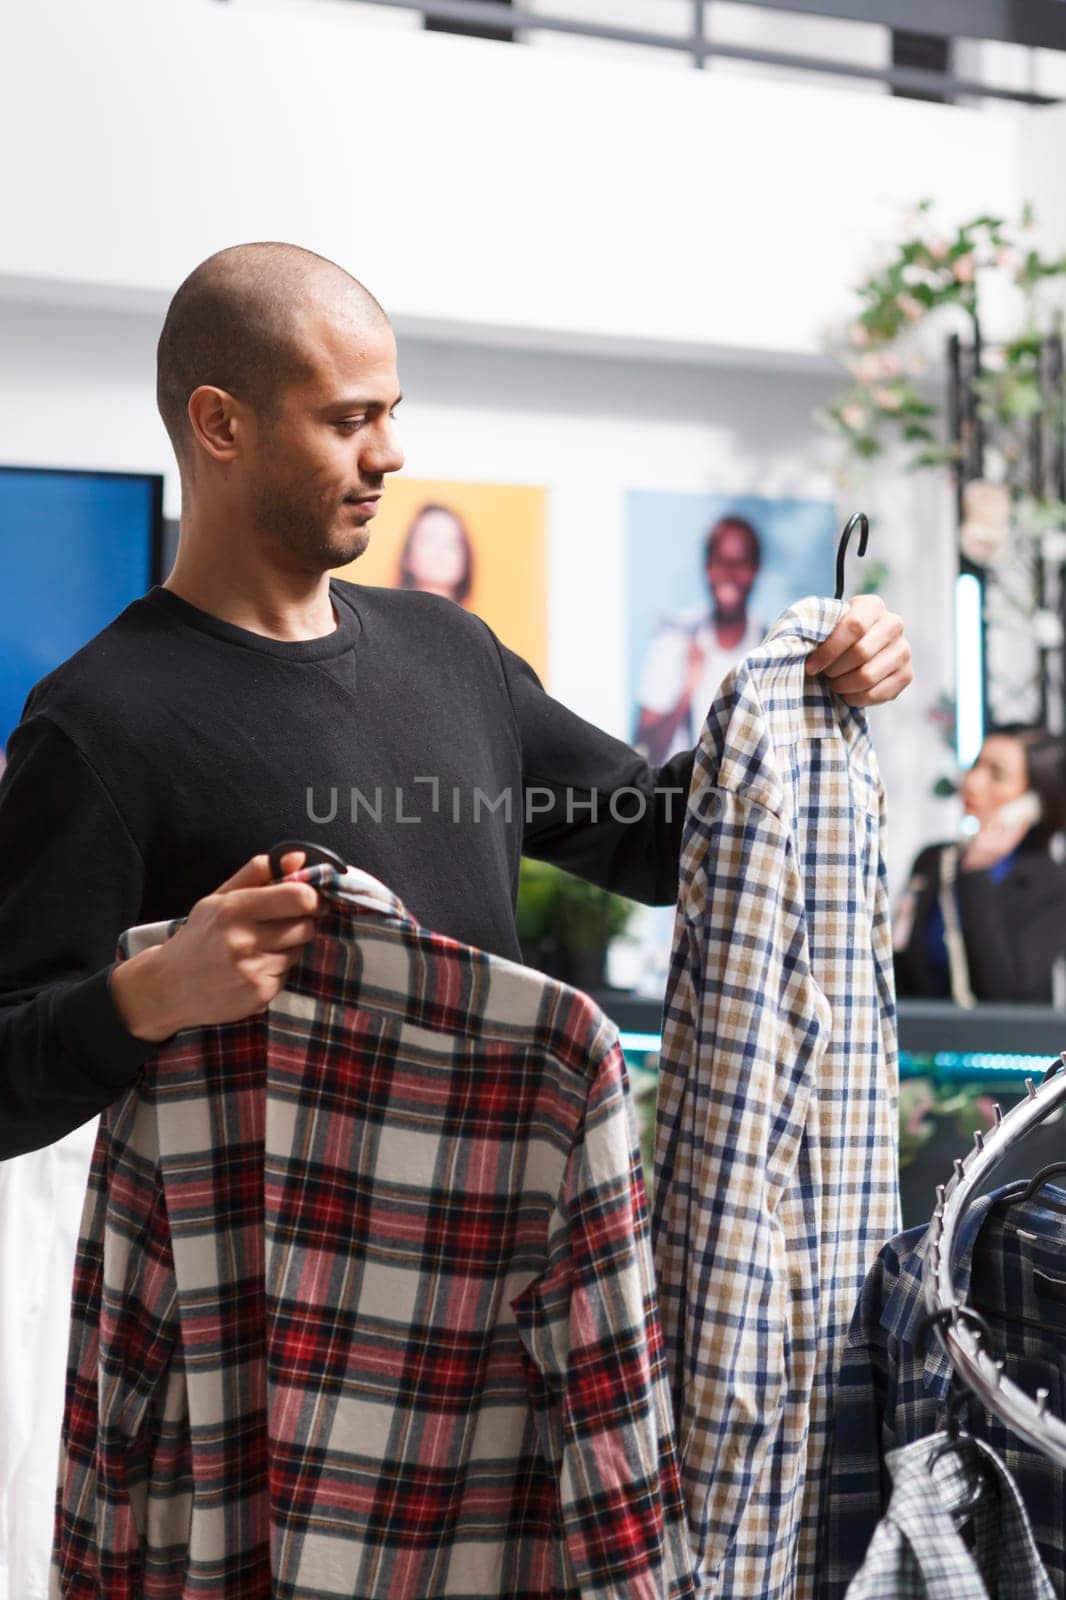 Mall customer browsing plaid shirts by DCStudio